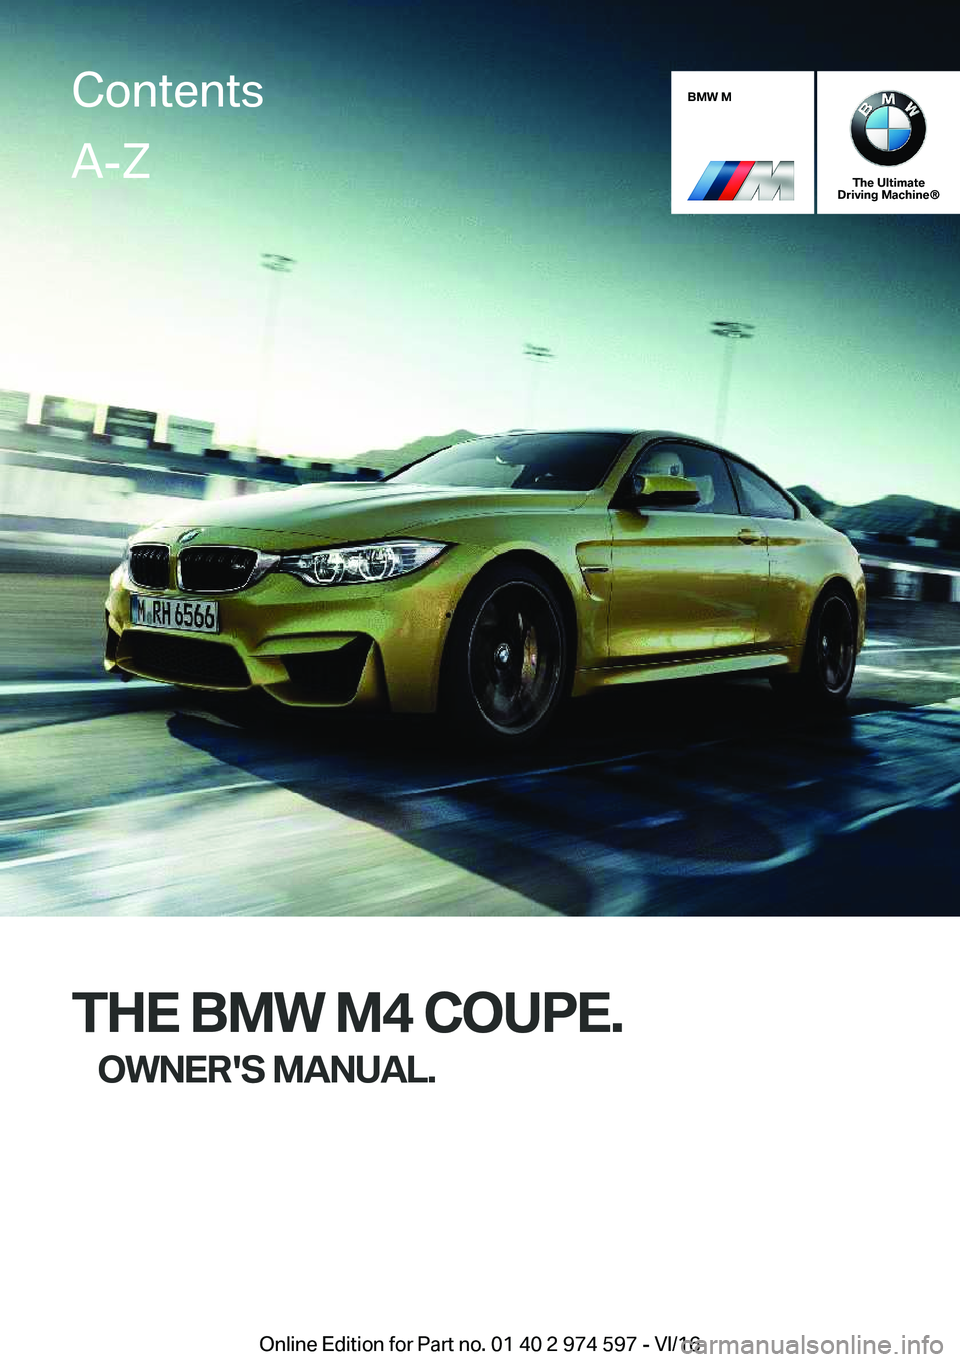 BMW M4 2017  Owners Manual �B�M�W��M
�T�h�e��U�l�t�i�m�a�t�e
�D�r�i�v�i�n�g��M�a�c�h�i�n�e�n
�T�H�E��B�M�W��M�4��C�O�U�P�E�.
�O�W�N�E�R�'�S��M�A�N�U�A�L�.
�C�o�n�t�e�n�t�s�A�-�Z
�O�n�l�i�n�e� �E�d�i�t�i�o�n� �f�o�r� 